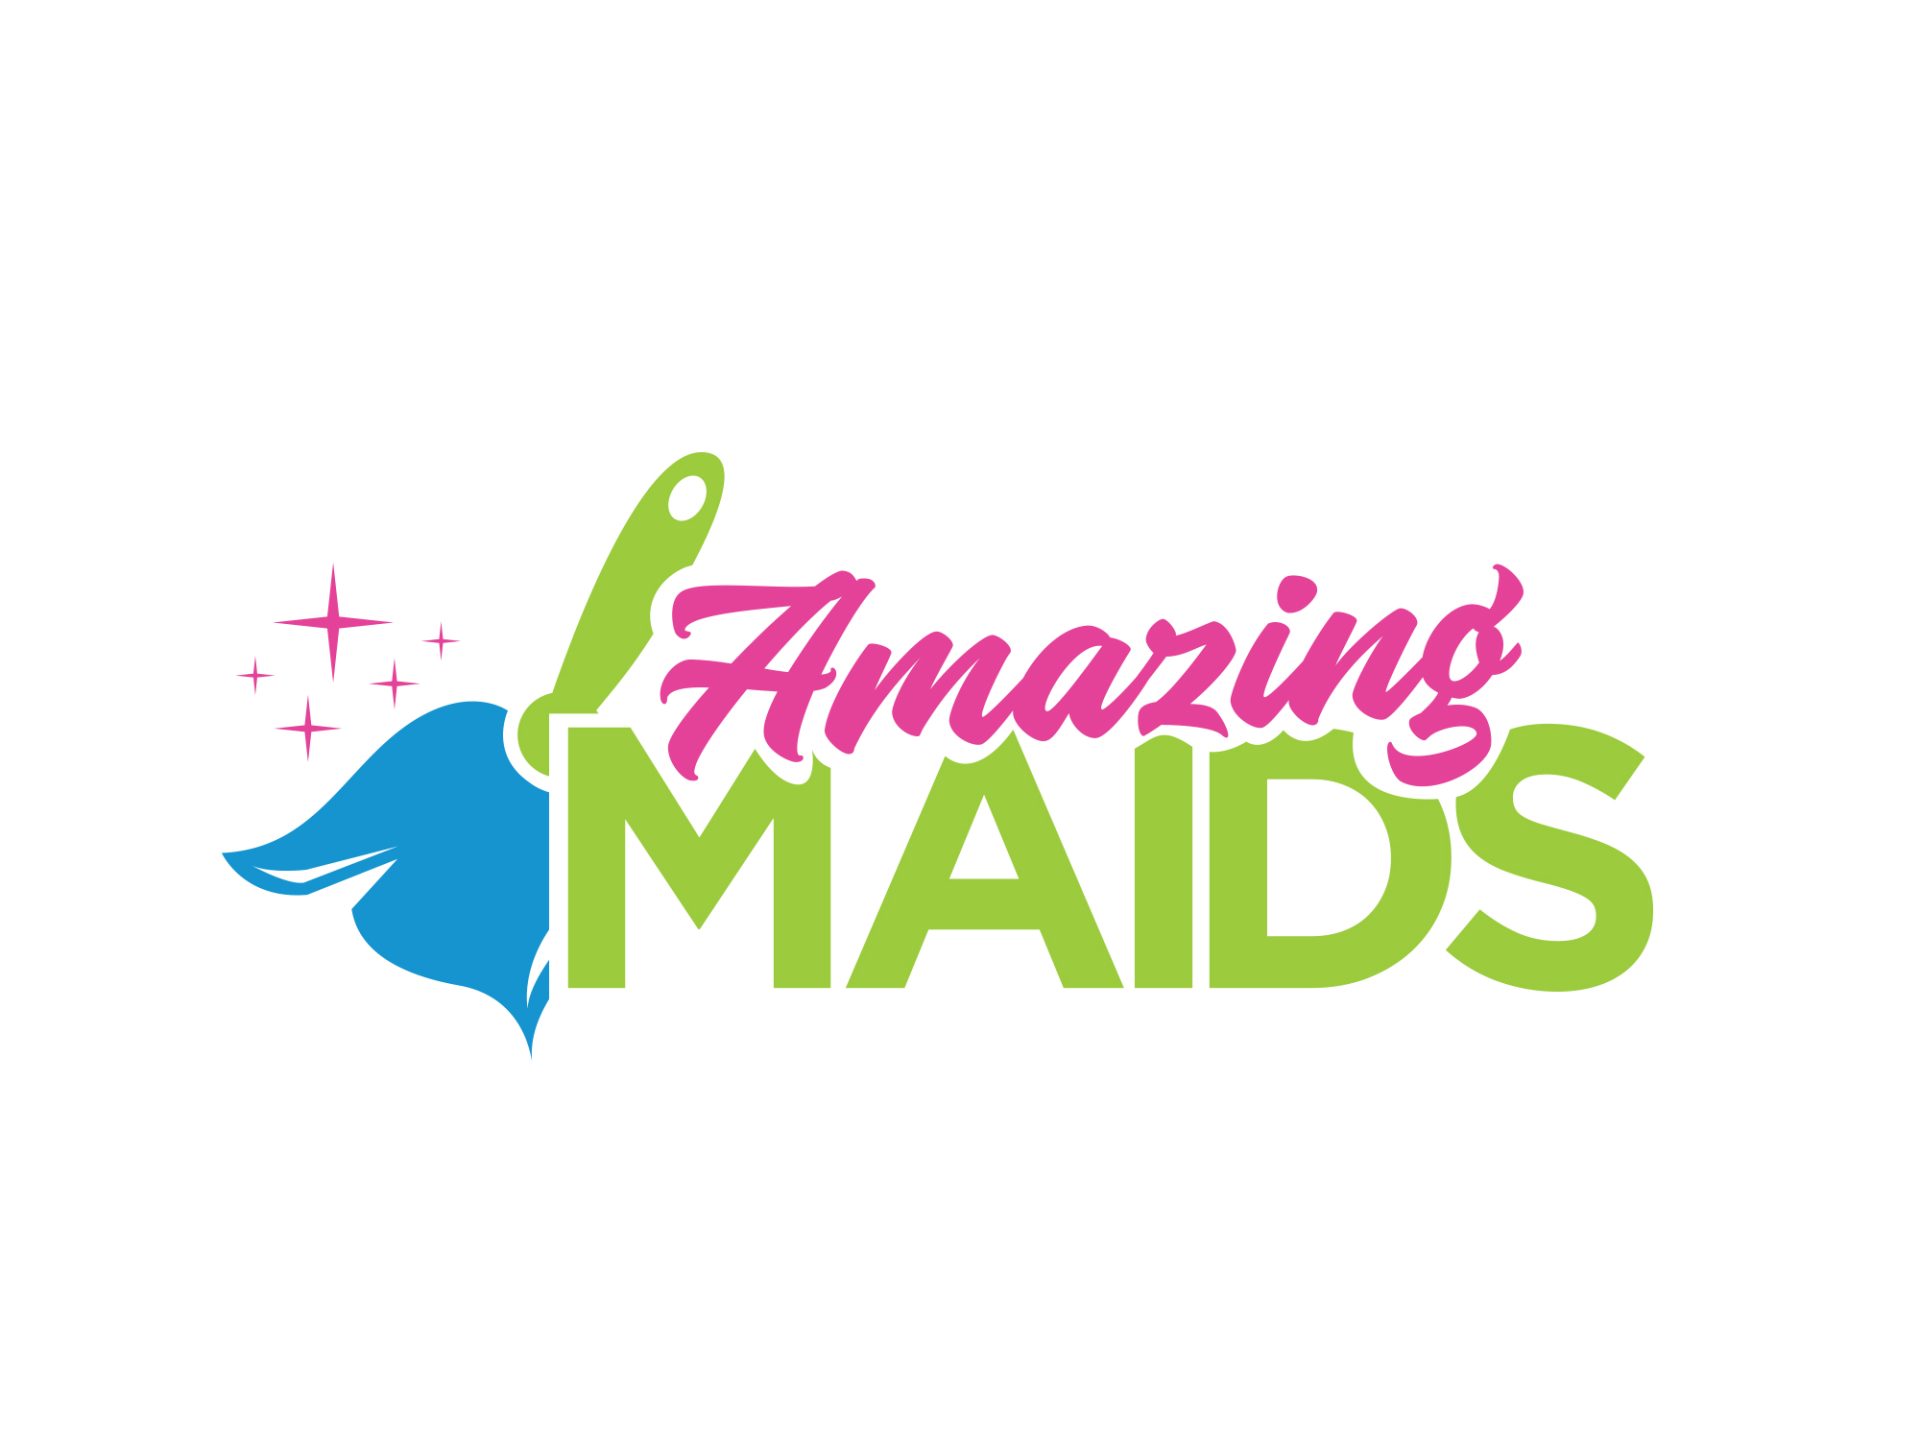 maid logo ideas 3